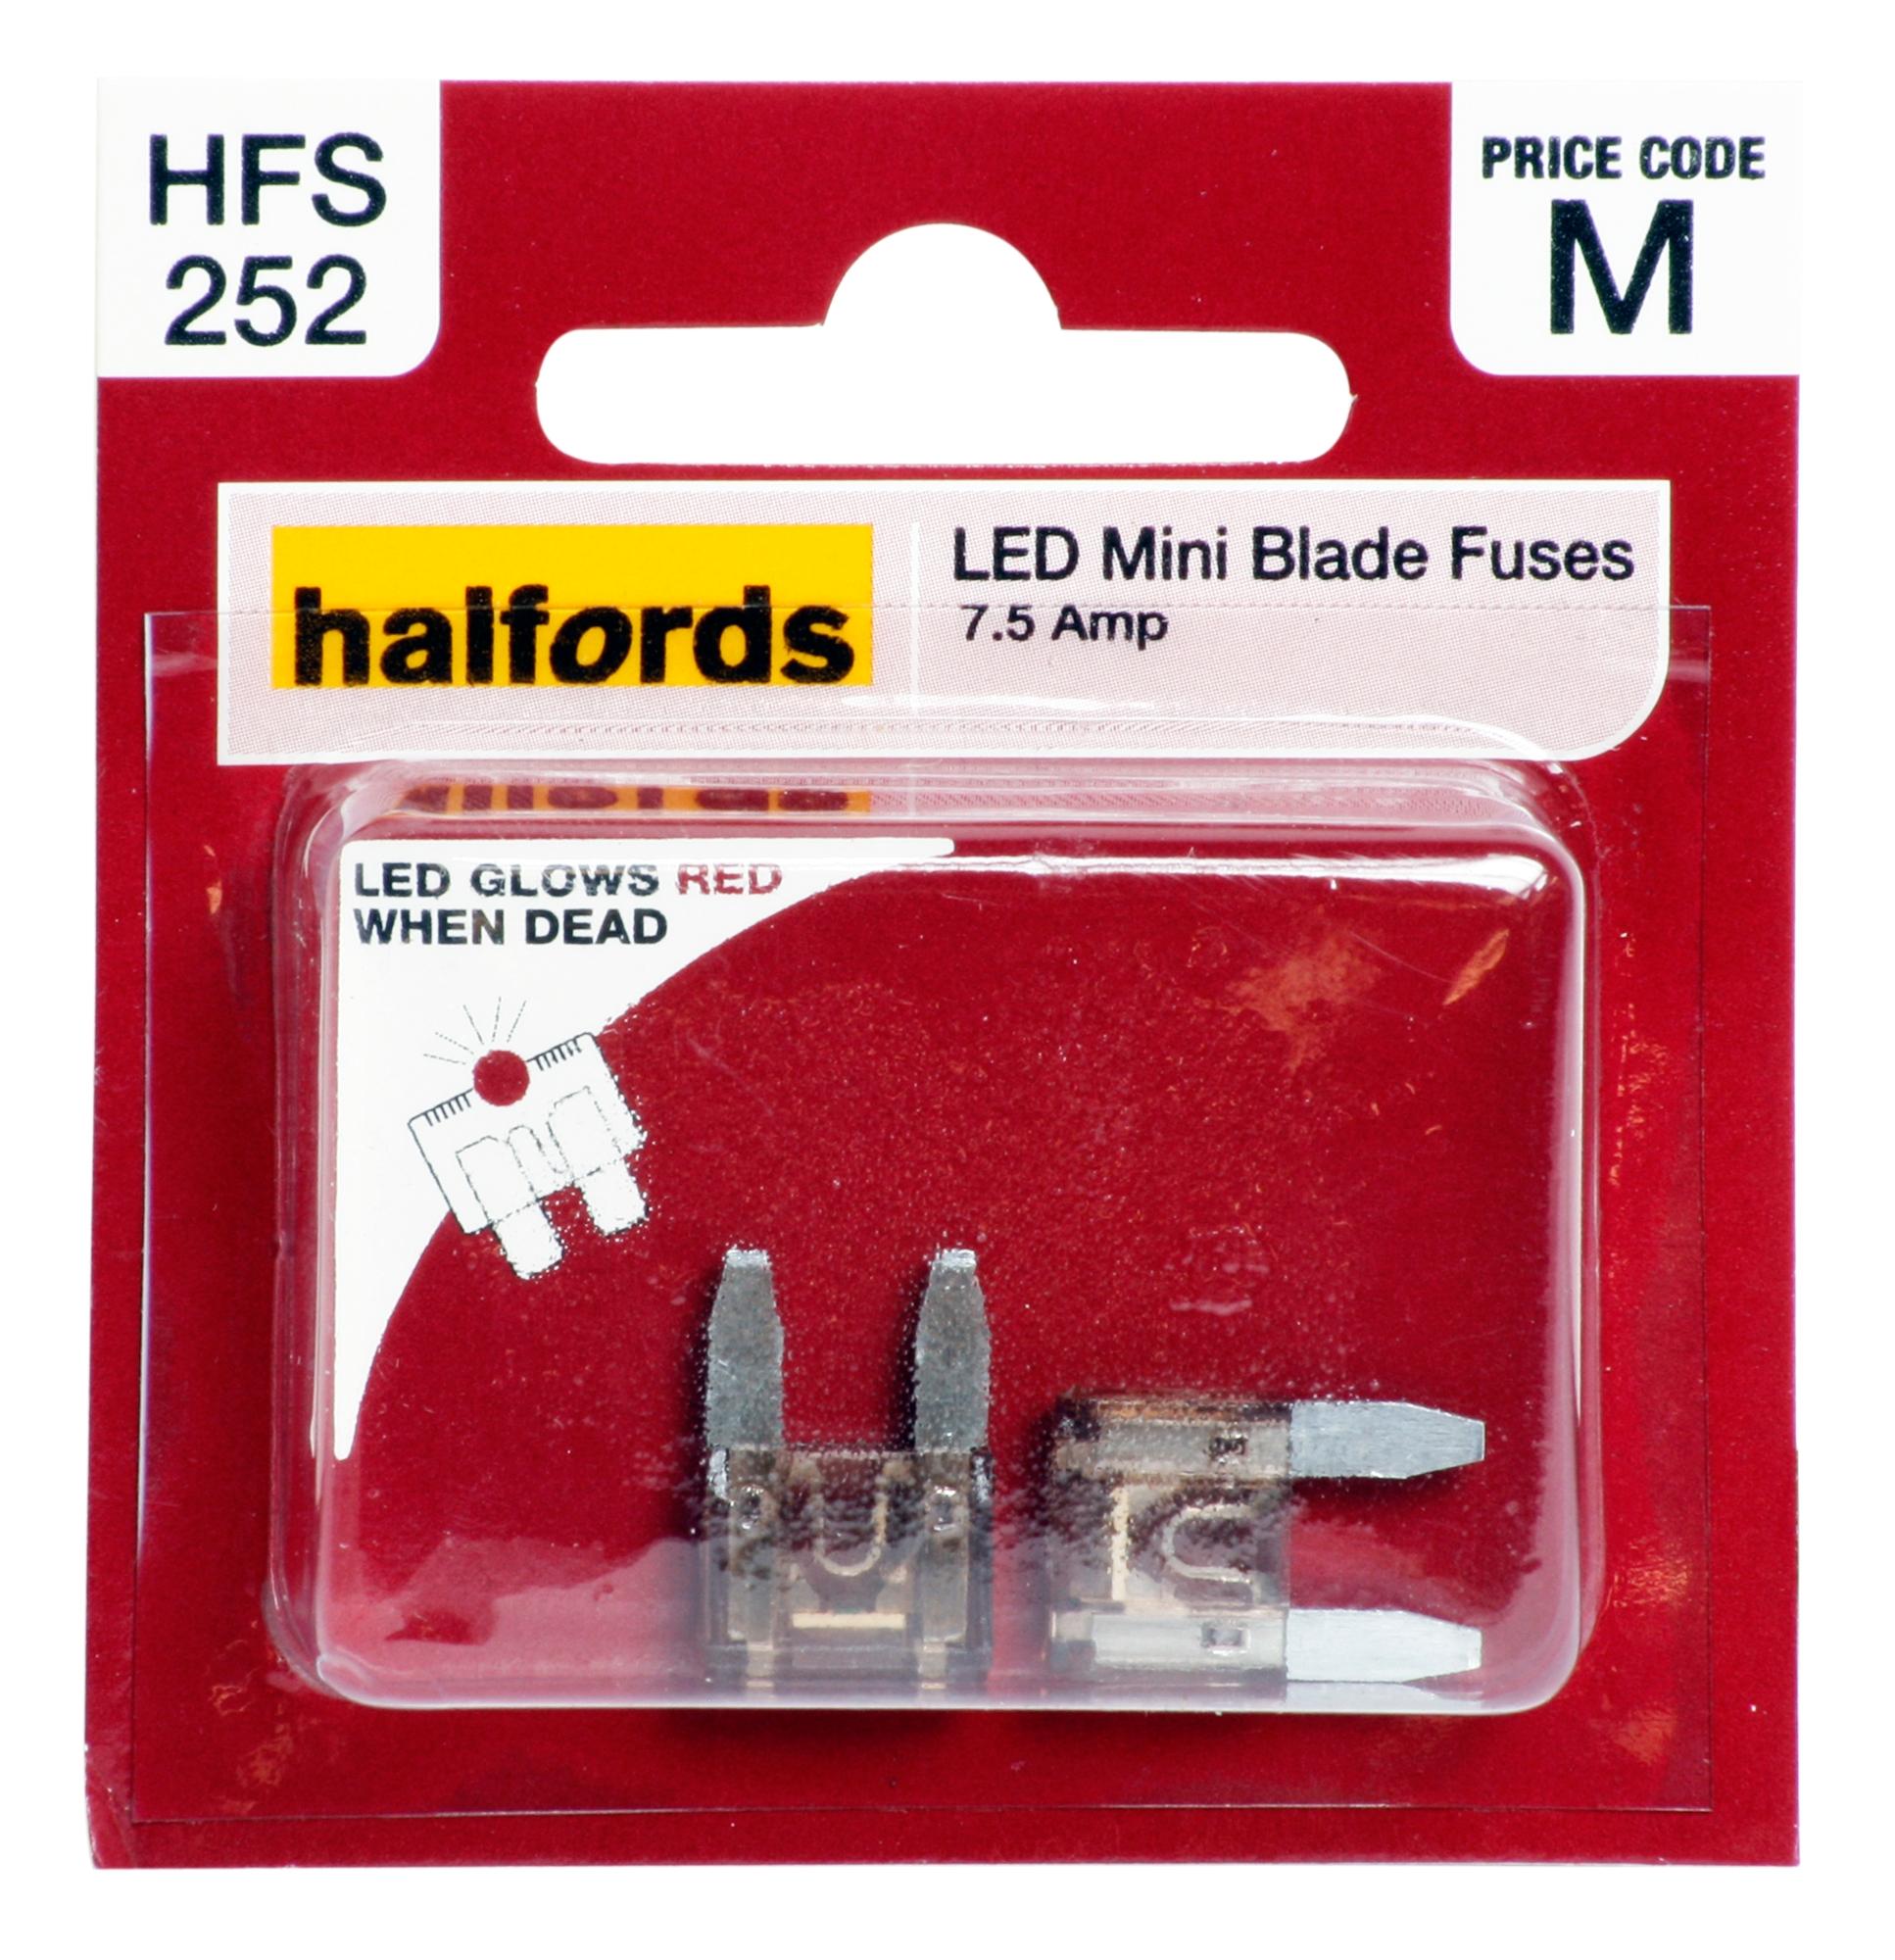 Halfords Led Mini Blade Fuses 7.5 Amp (Hfs252)